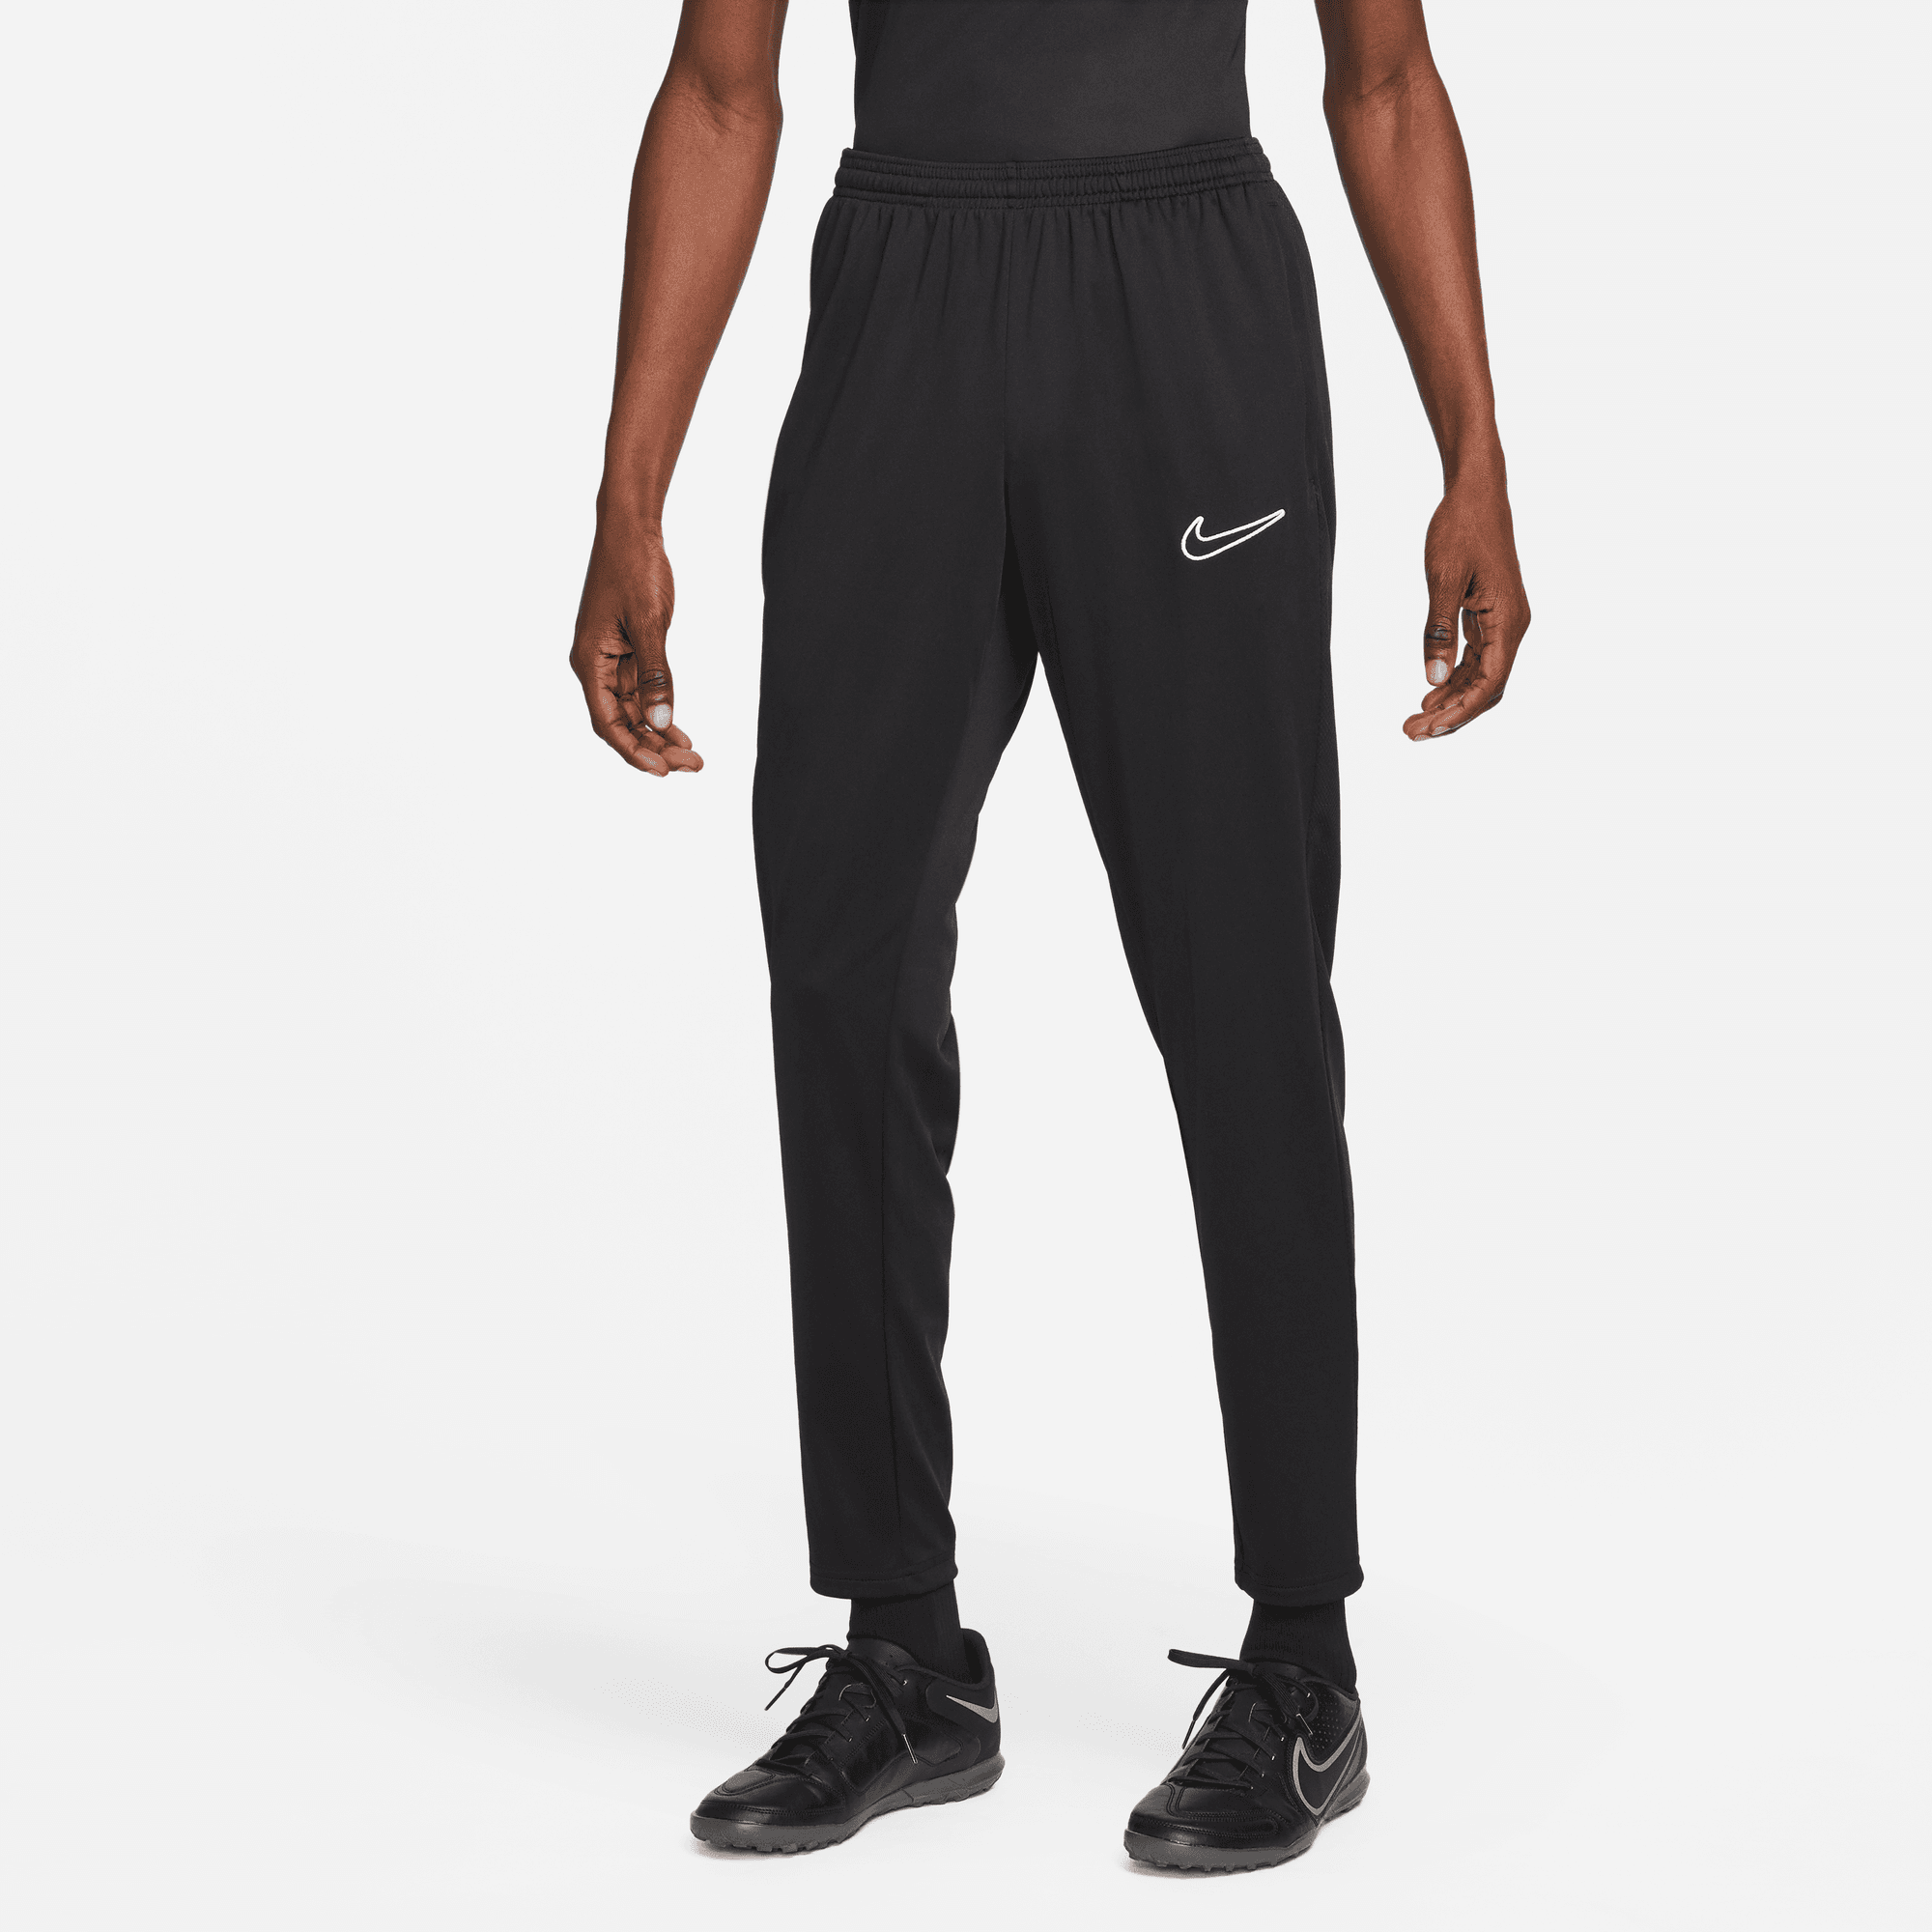 Ongeldig Veilig Crack pot stefanssoccer.com:Nike Dri-Fit Academy Pants - Black